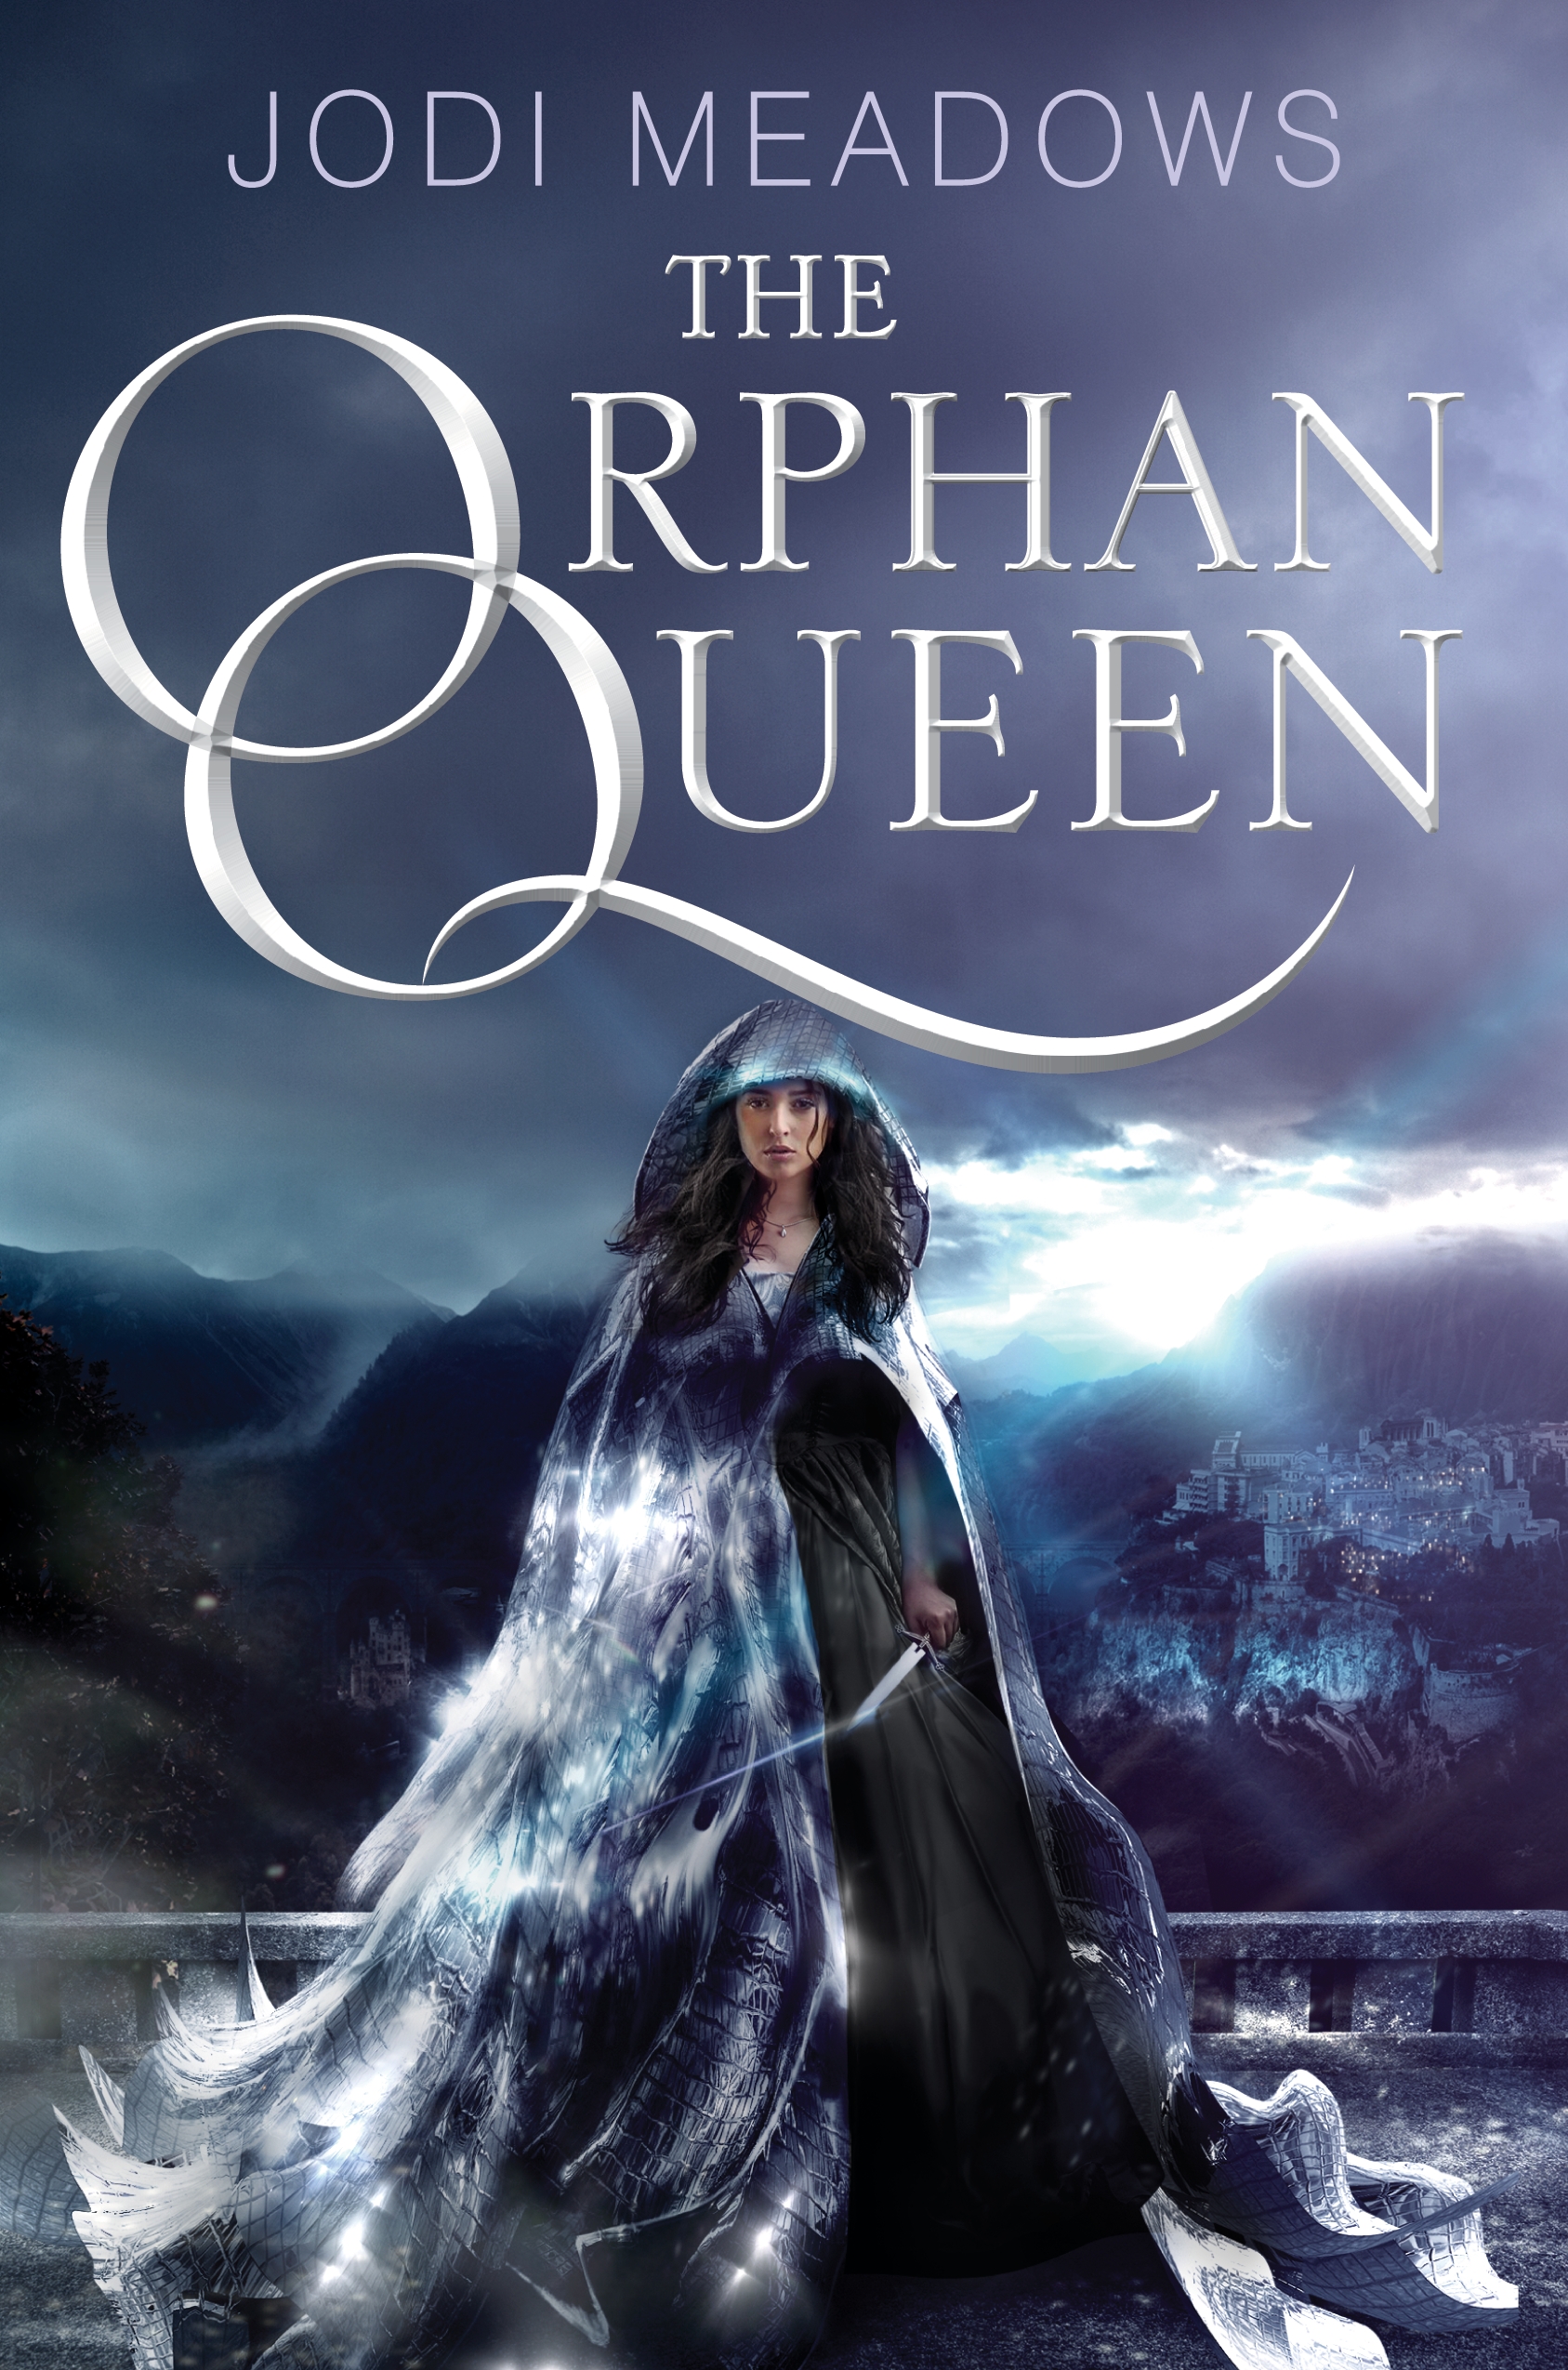 The Orphan Queen (The Orphan Queen #1) by Jodi Meadows